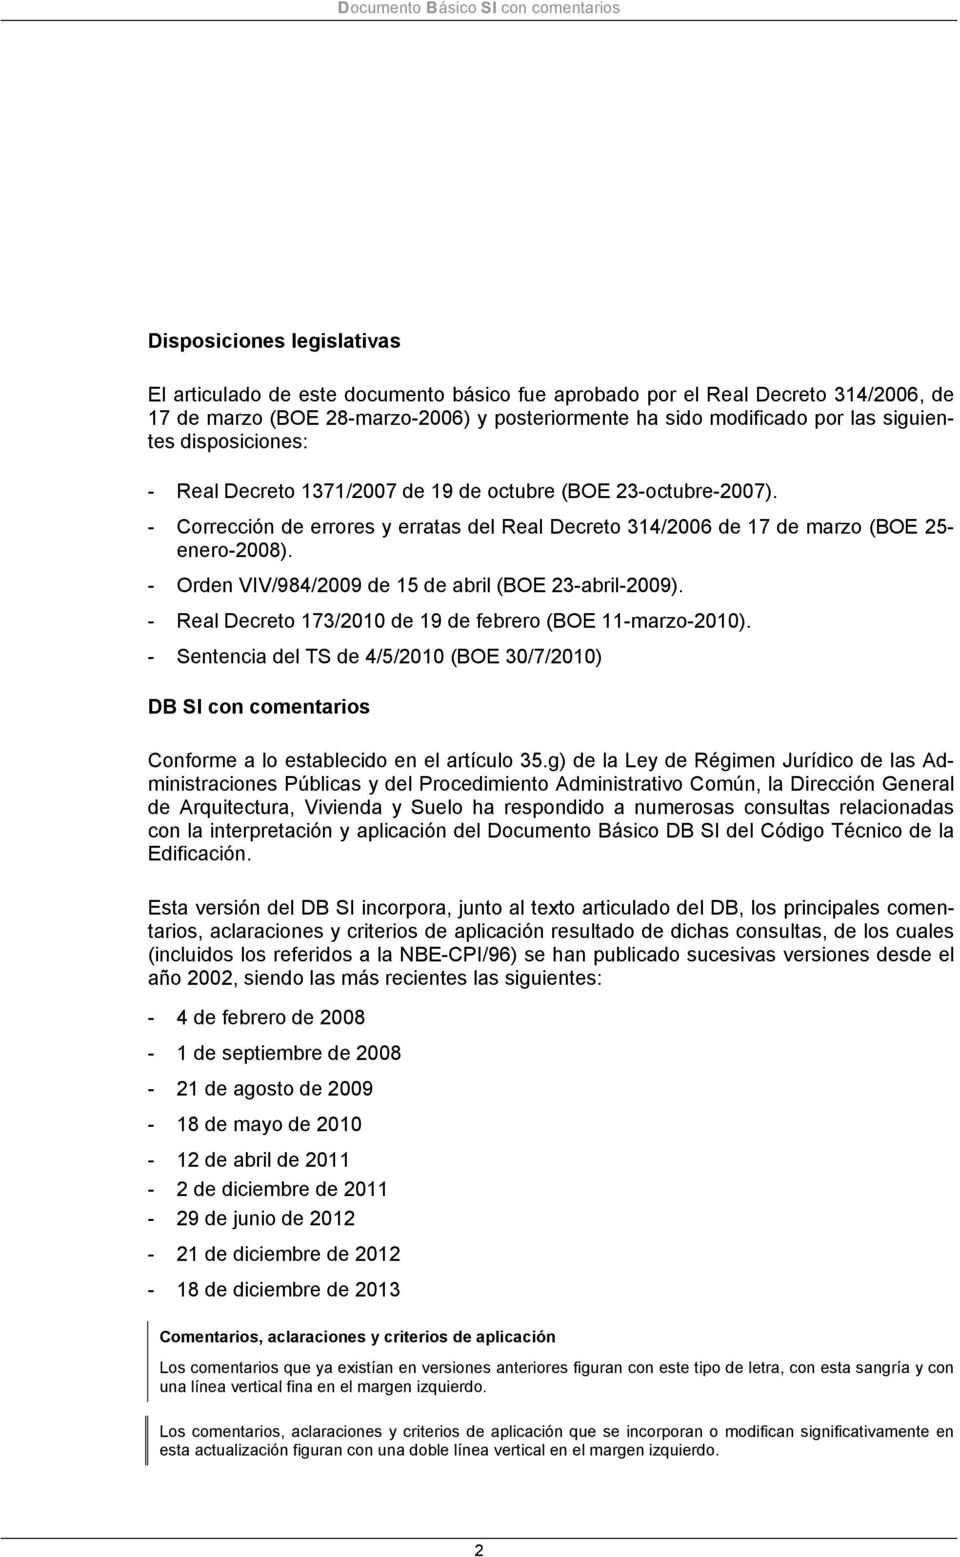 - Orden VIV/984/2009 de 15 de abril (BOE 23-abril-2009). - Real Decreto 173/2010 de 19 de febrero (BOE 11-marzo-2010).